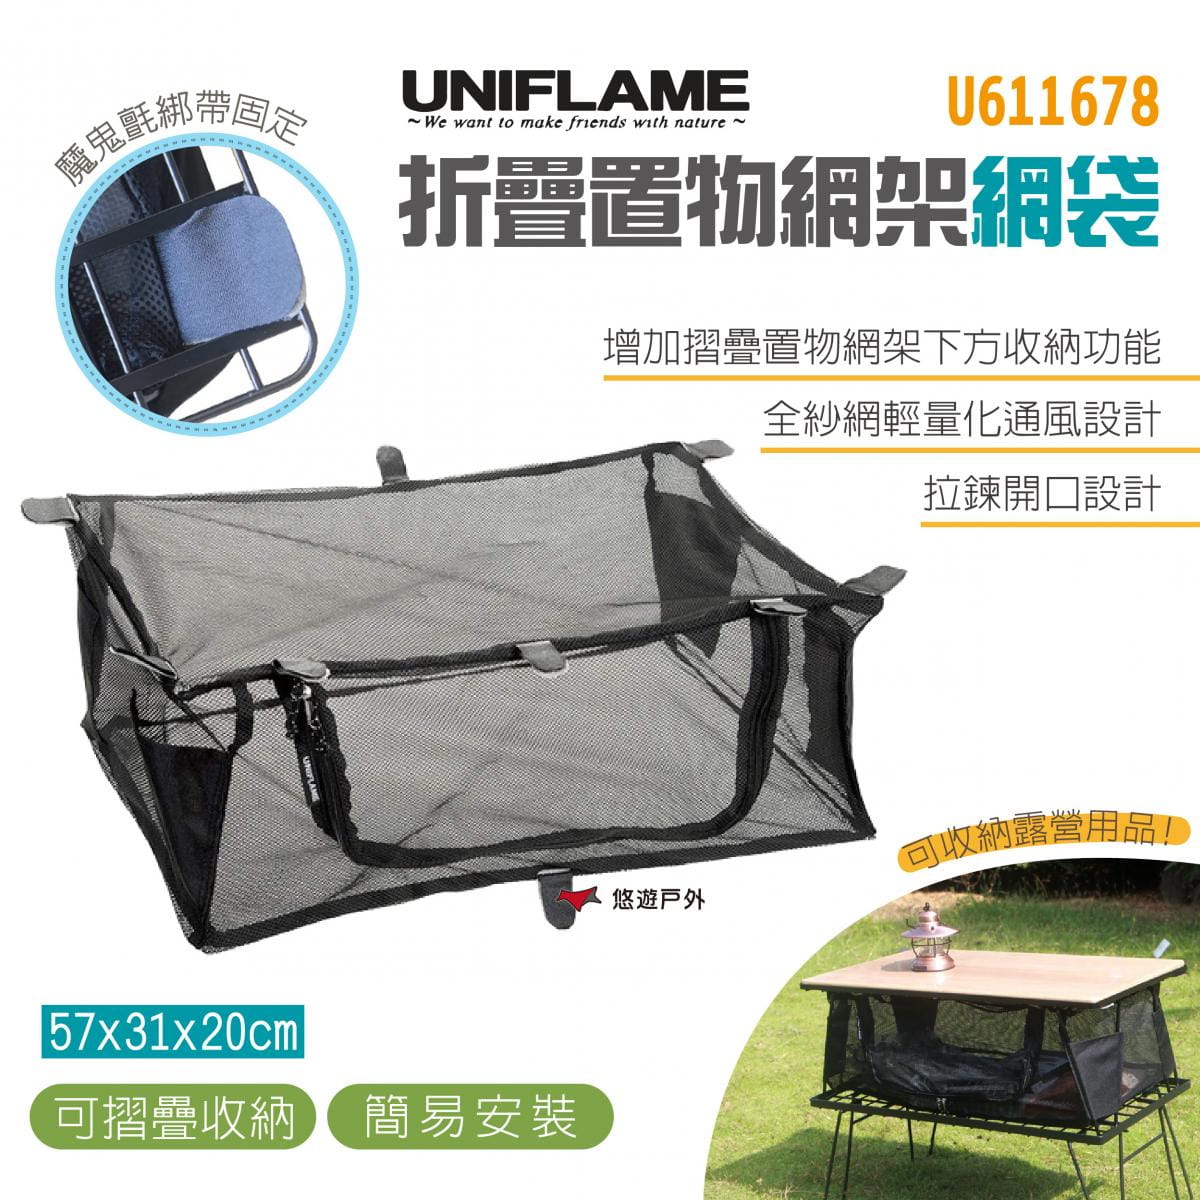 【UNIFLAME】折疊置物網架網袋 通風 露營 收納 摺疊 餐廚 悠遊戶外 0